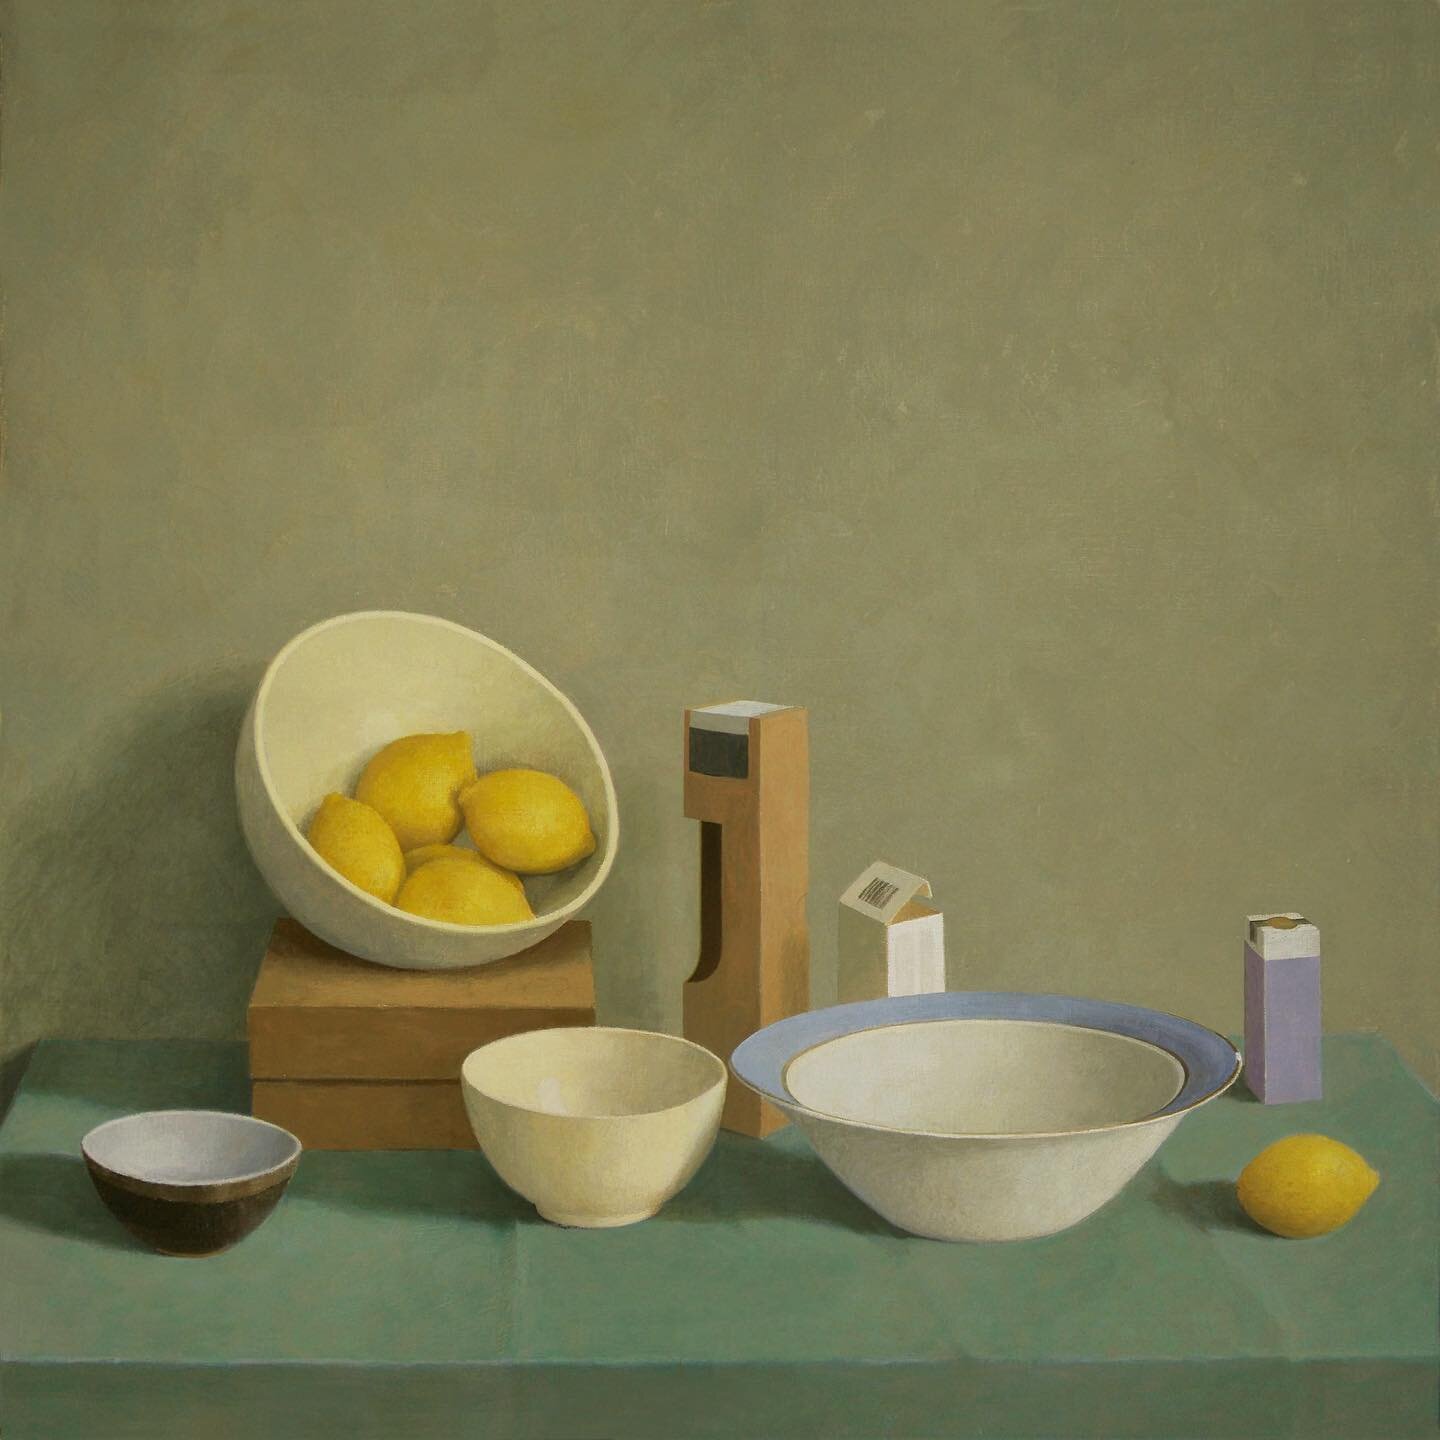 2020 Boxes Bowls and Lemons
Egg/oil tempera on canvas 
100x100 cm

#stilllifepainting #boxes #bowls #lemons #eggtempera